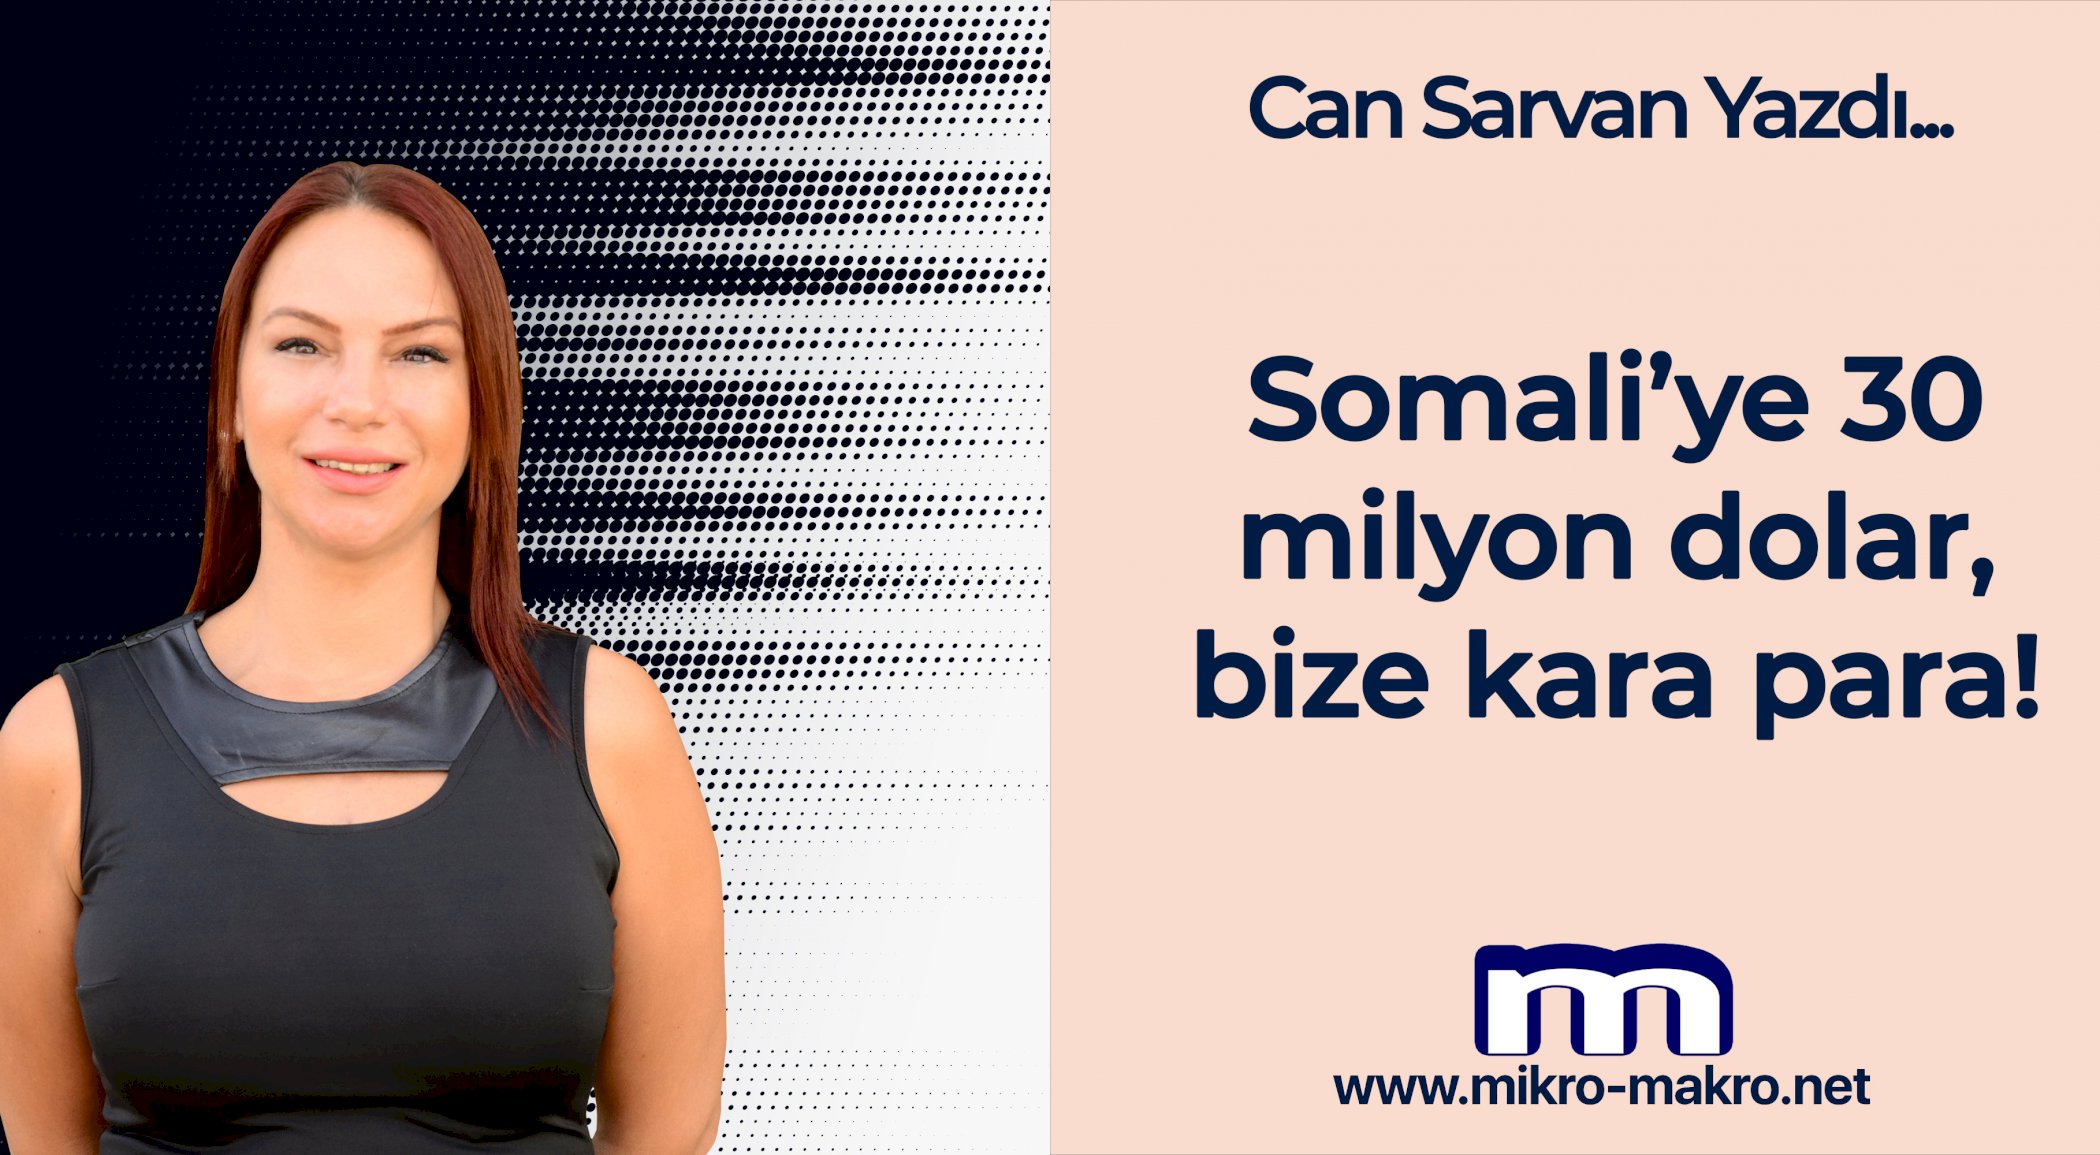 https://www.mikro-makro.net/somaliye-30-milyon-dolar-bize-kara-para